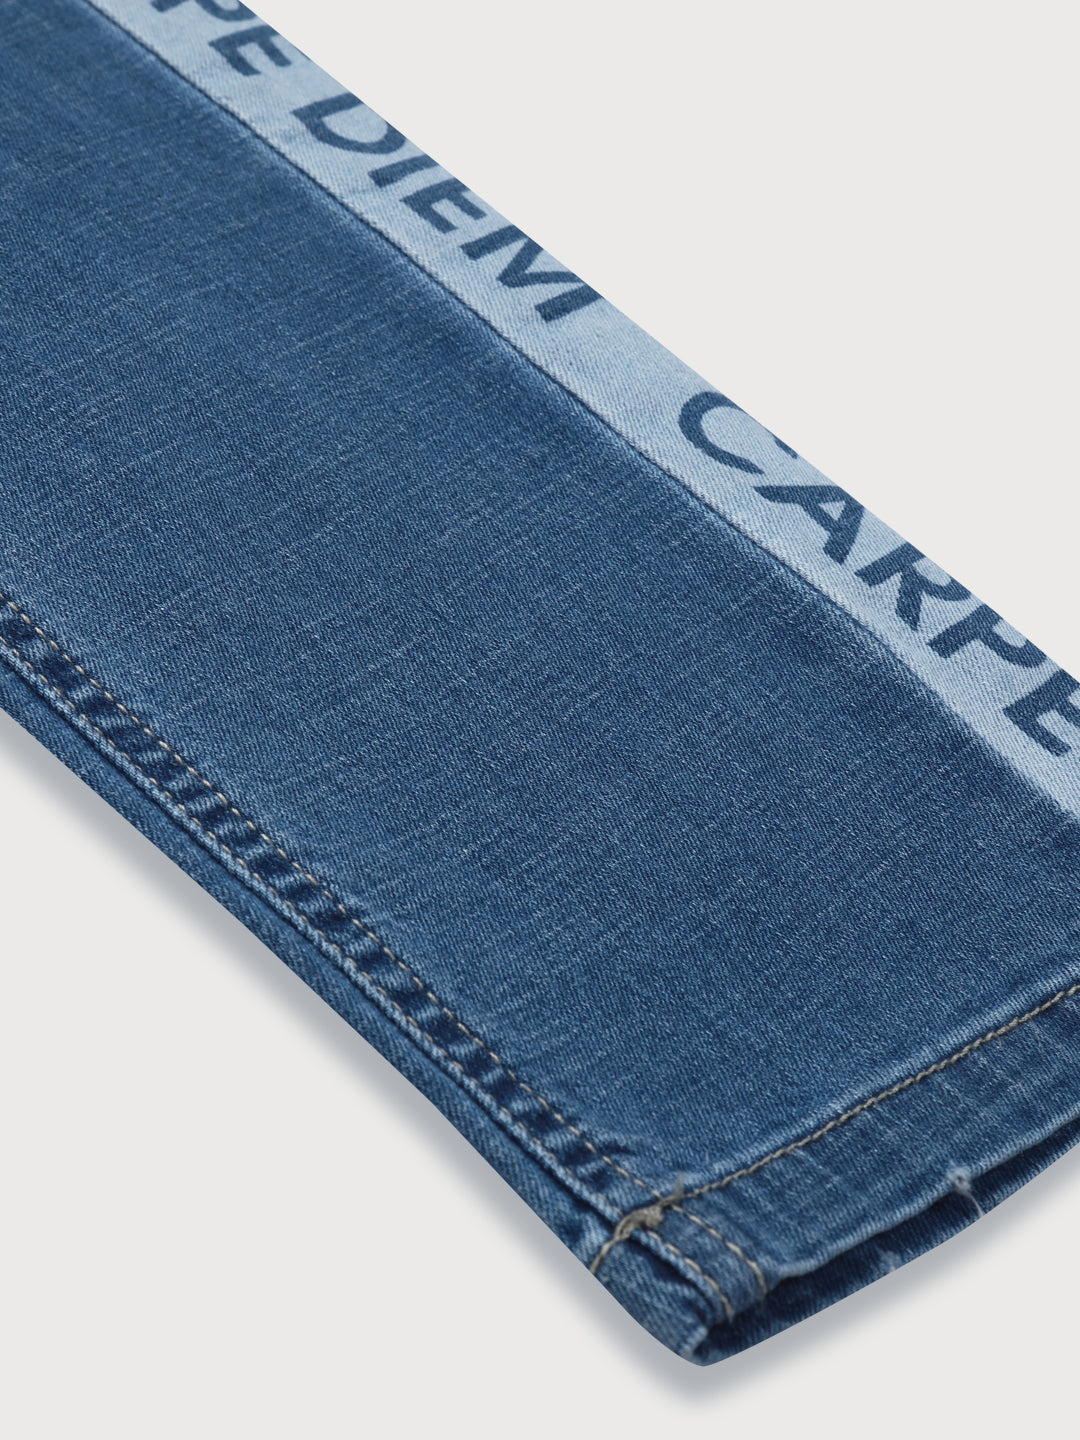 Boys Navy Blue Solid Denim Jeans